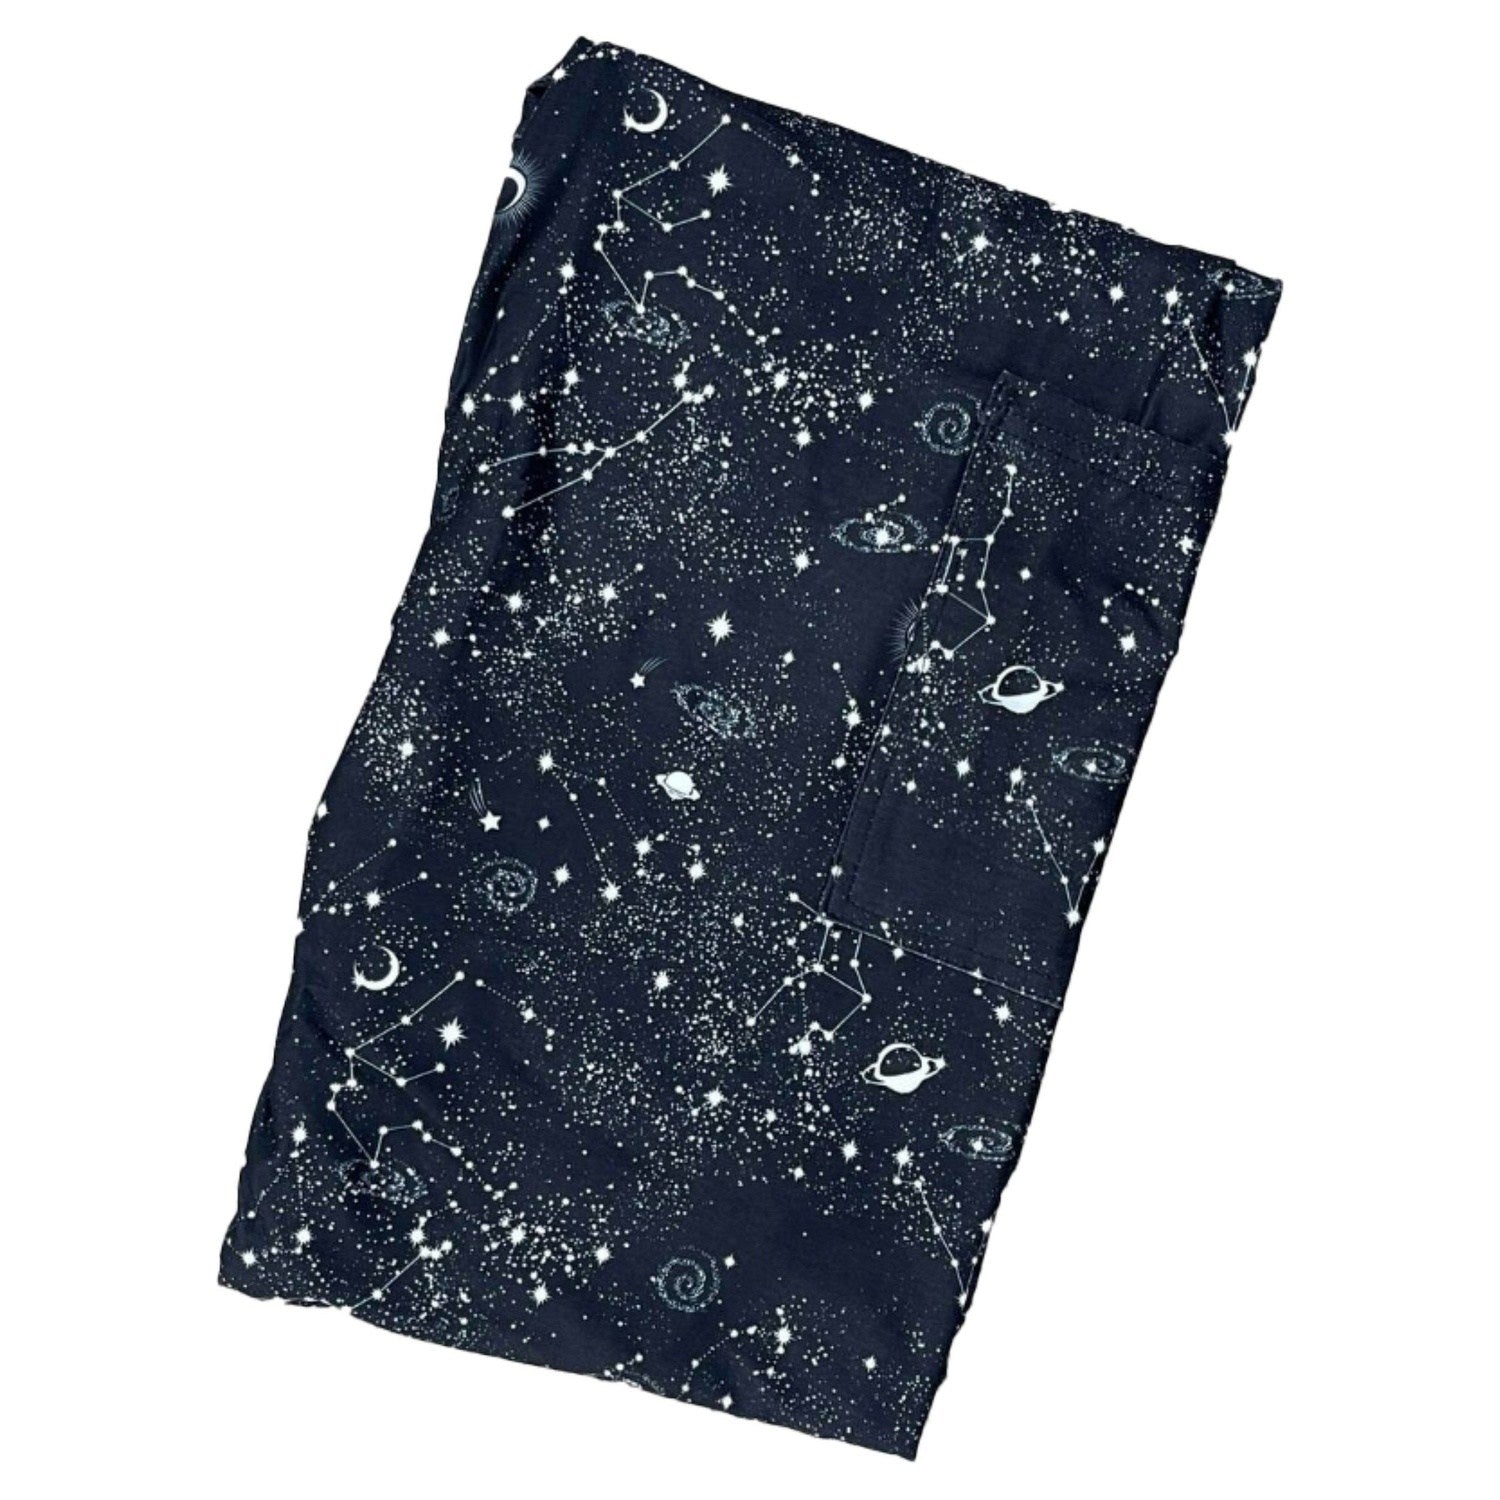 Black Galaxy Leggings - Nebula, Stars, Full Length Pocket Leggings Ready to Ship